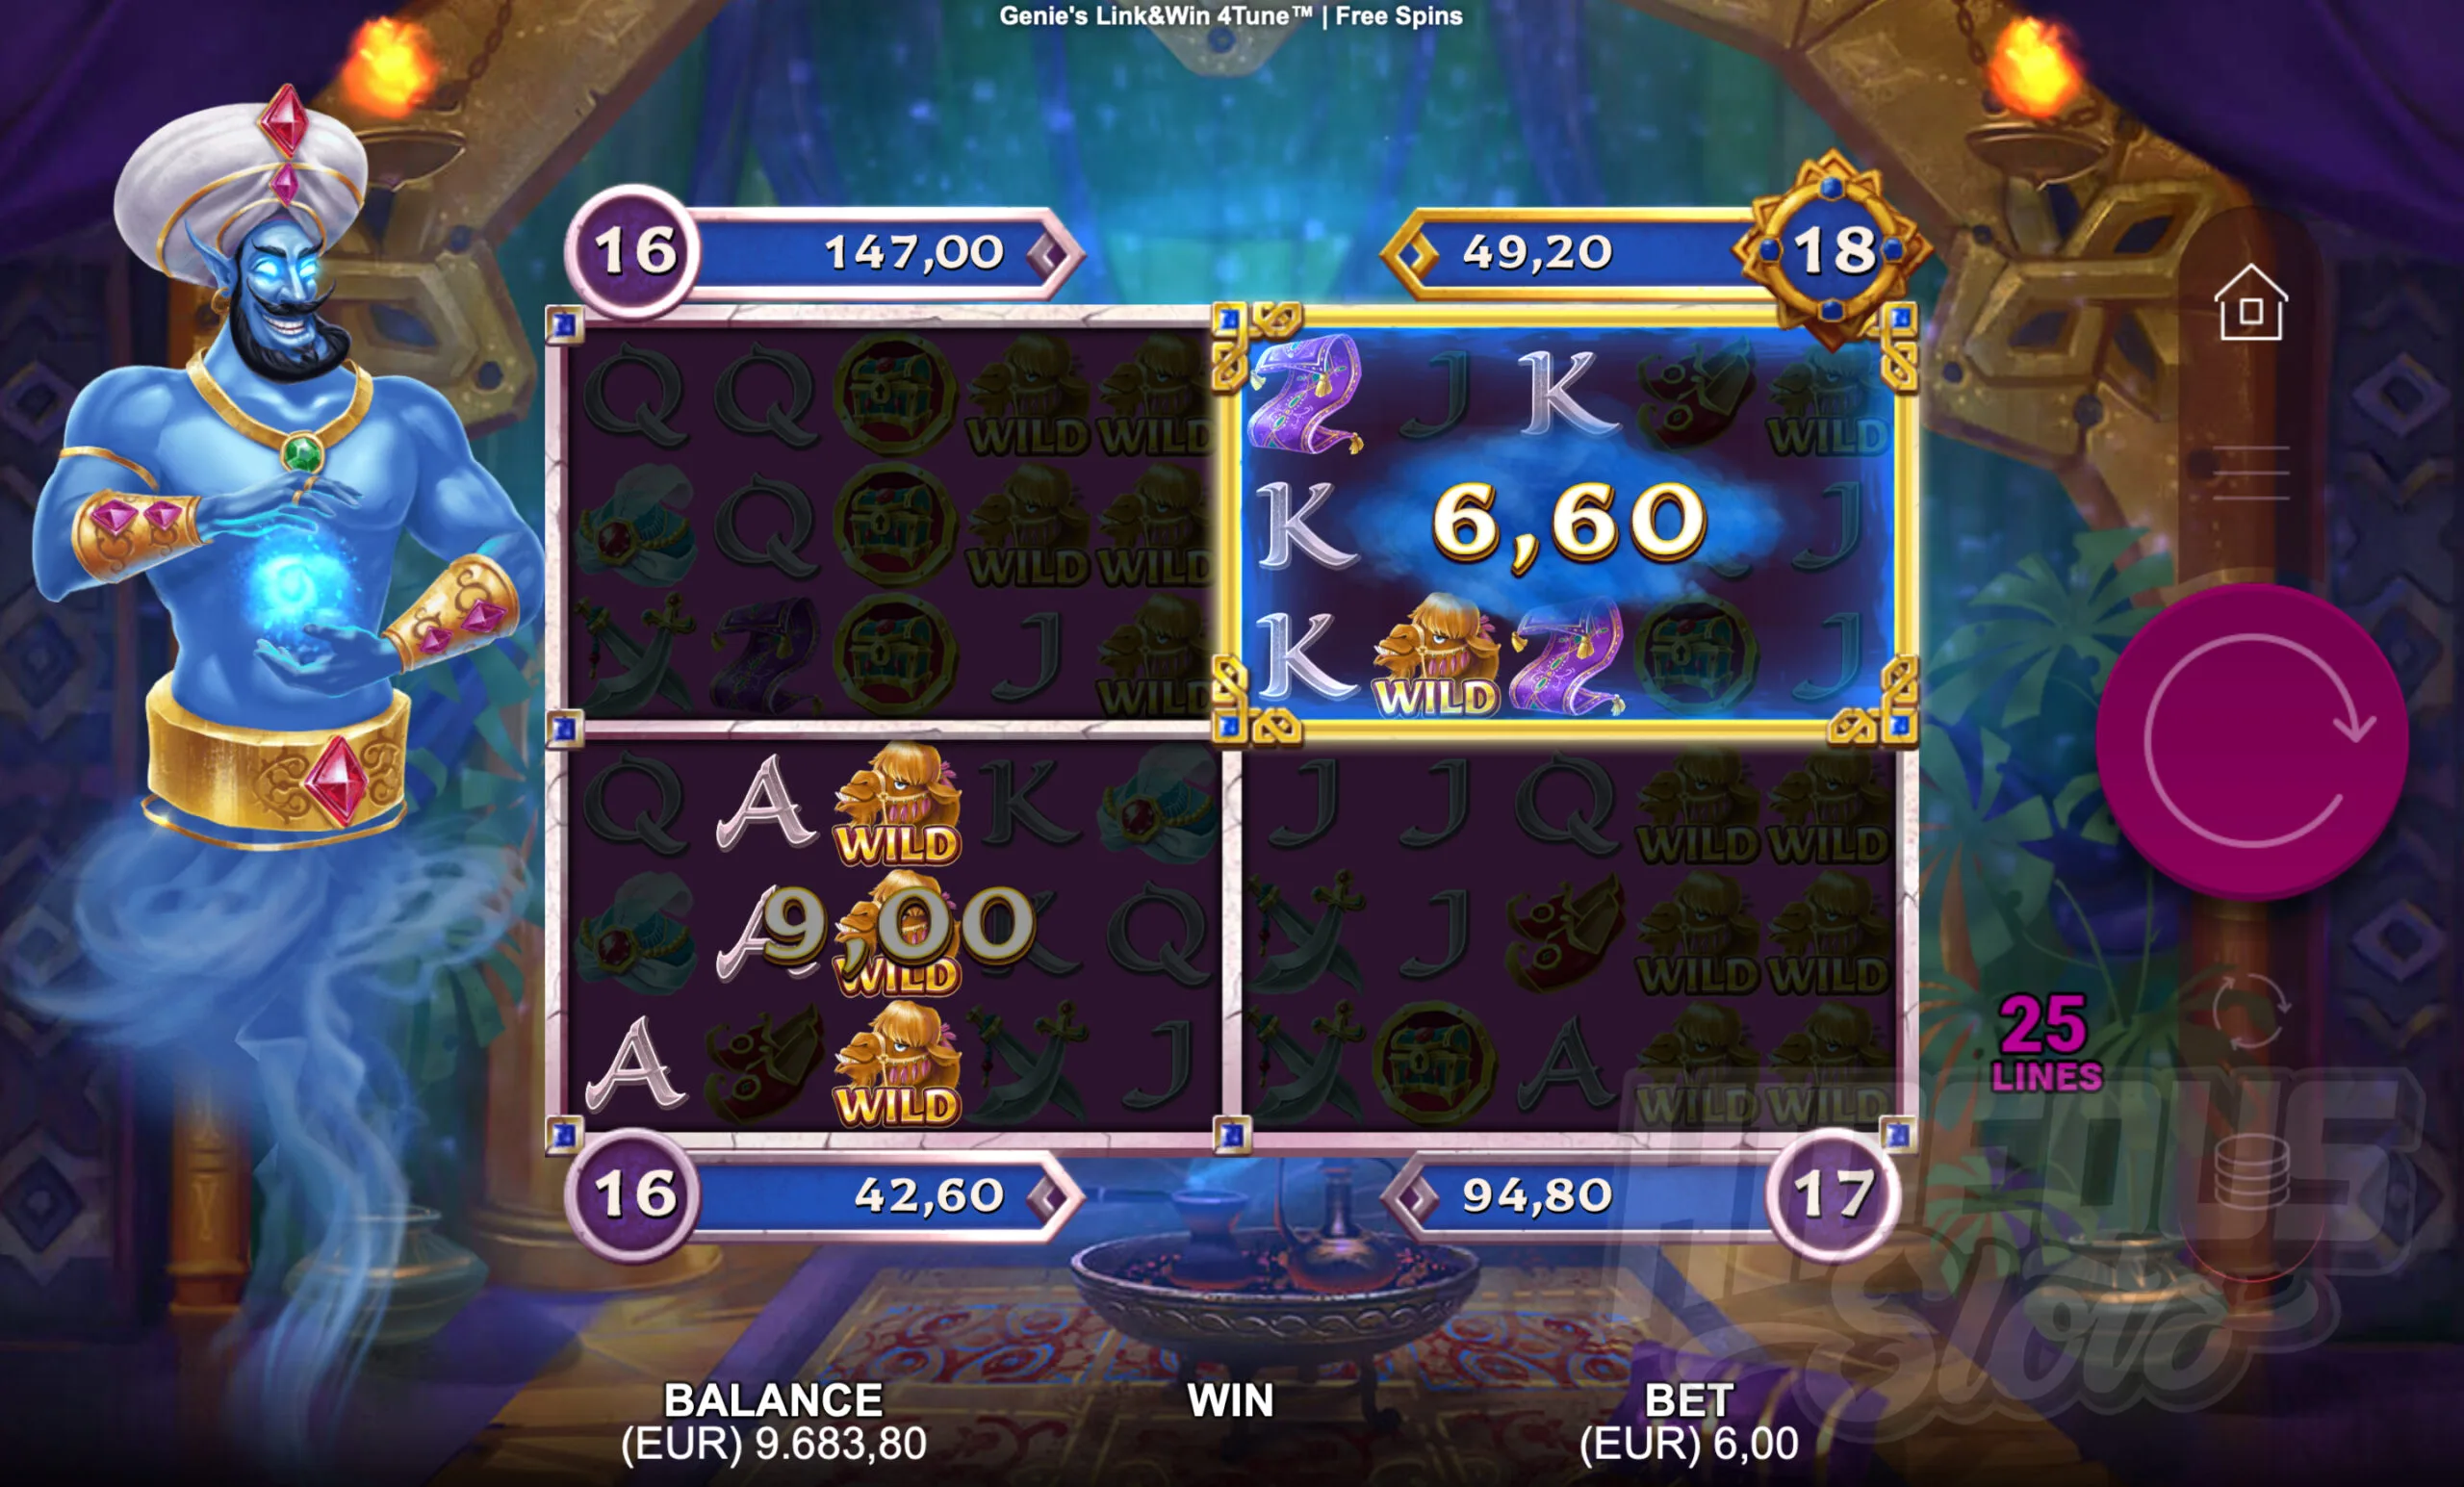 Genie's Link&Win 4Tune Free Spins